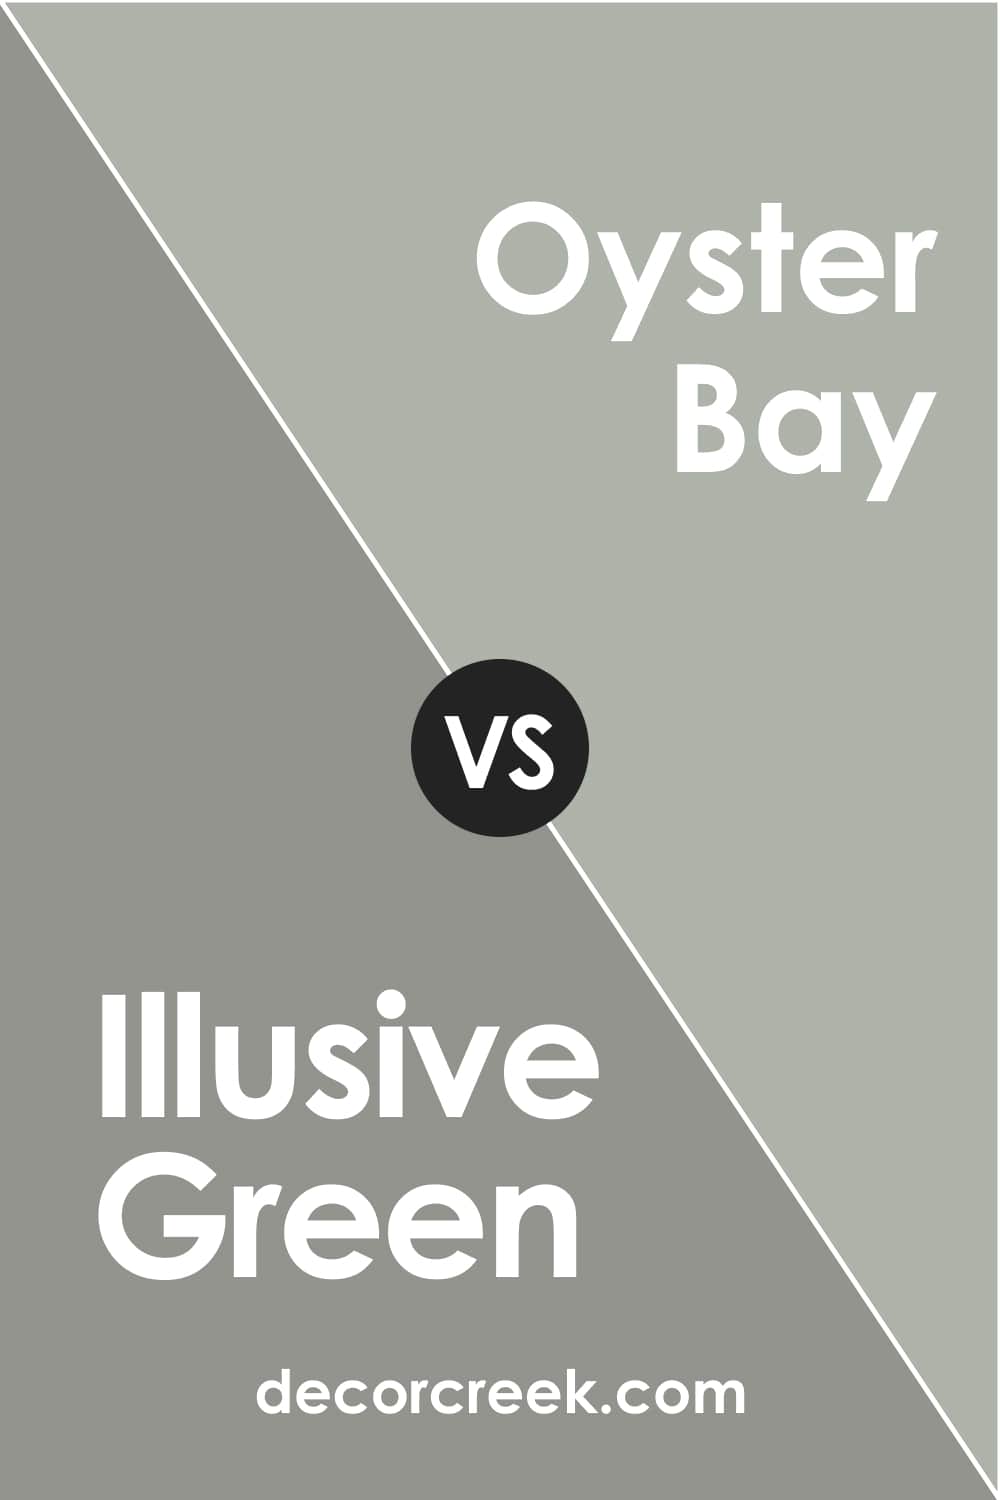 Illusive Green vs Oyster Bay